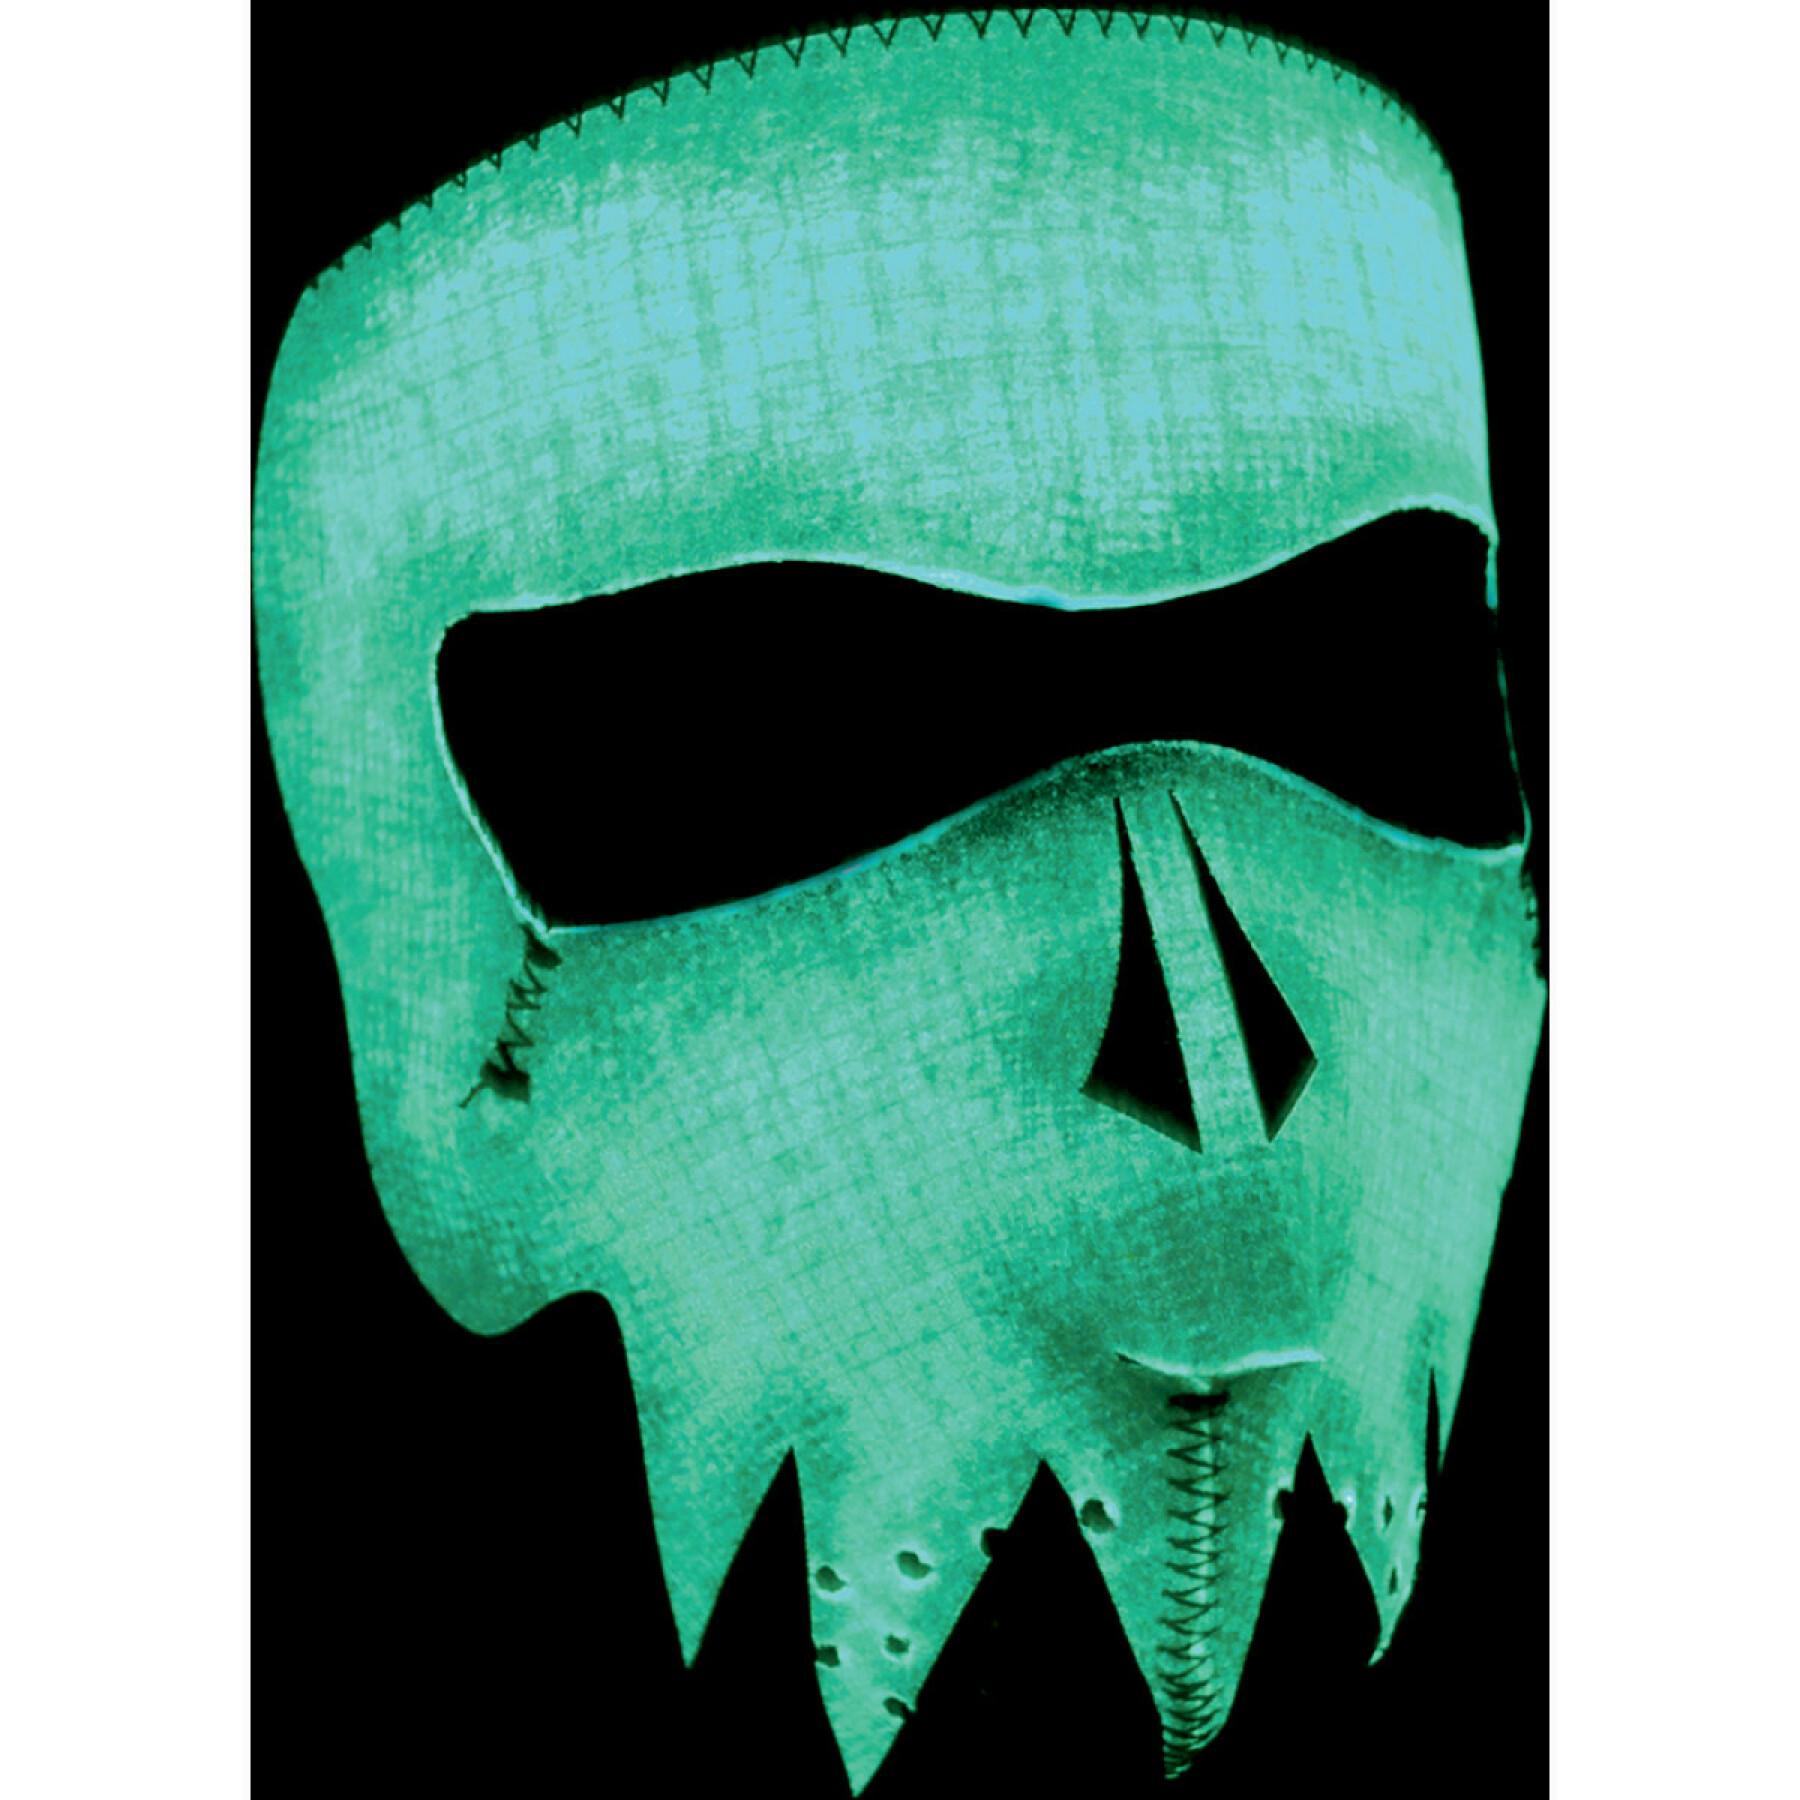 Cagoule moto Zan Headgear full face glow-in-the-dark skull